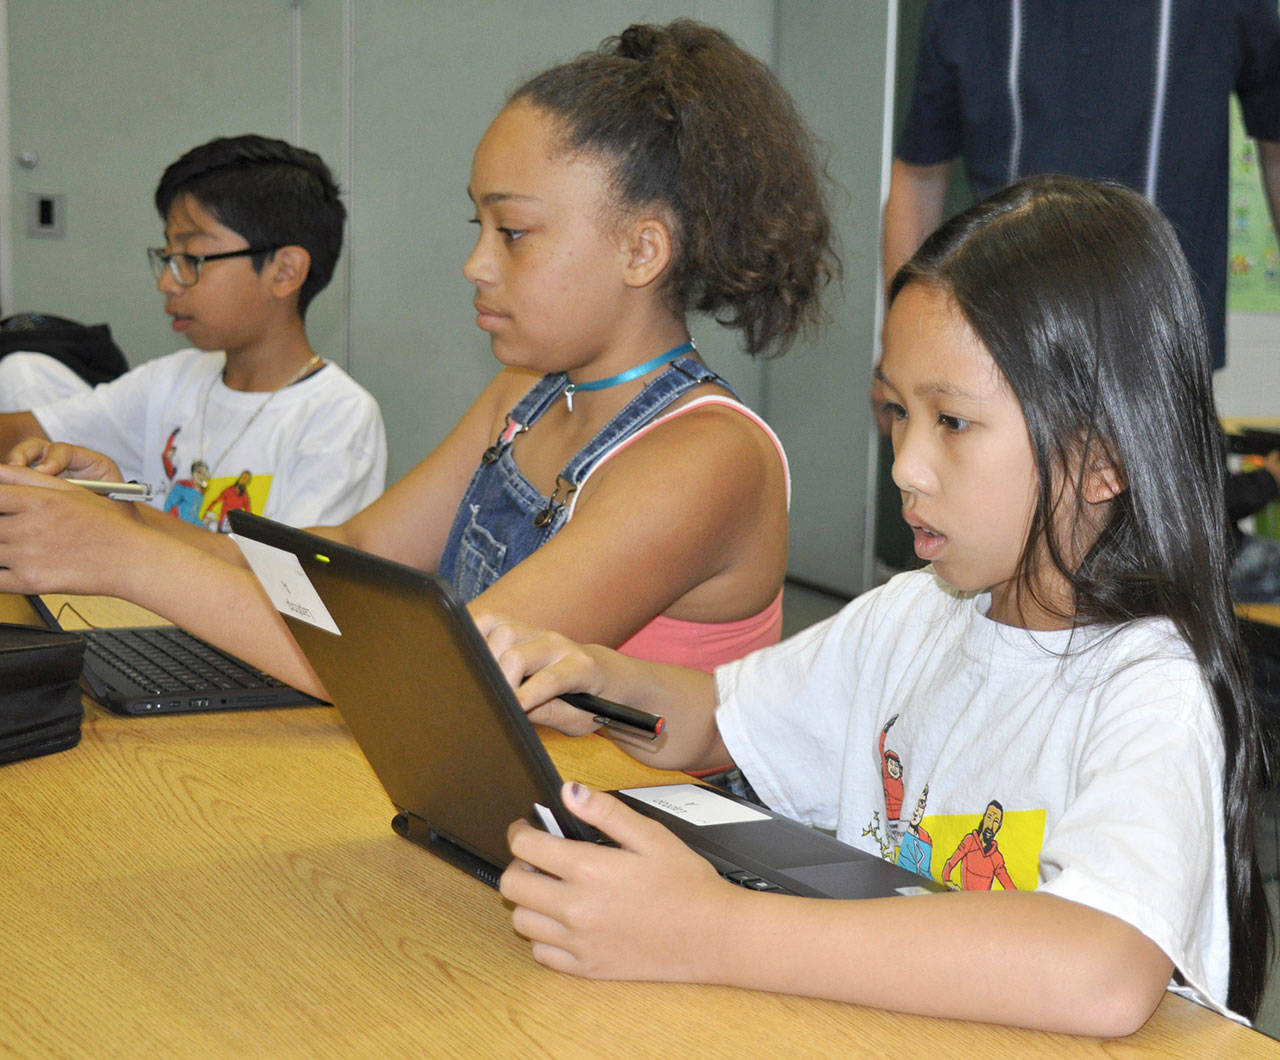 From left, Sebastian Rodriguez, Melanie Learmonth and Voleank Veakrakmann try out laptops during a summer school program at Emerald Park Elementary School. HEIDI SANDERS, Kent Reporter